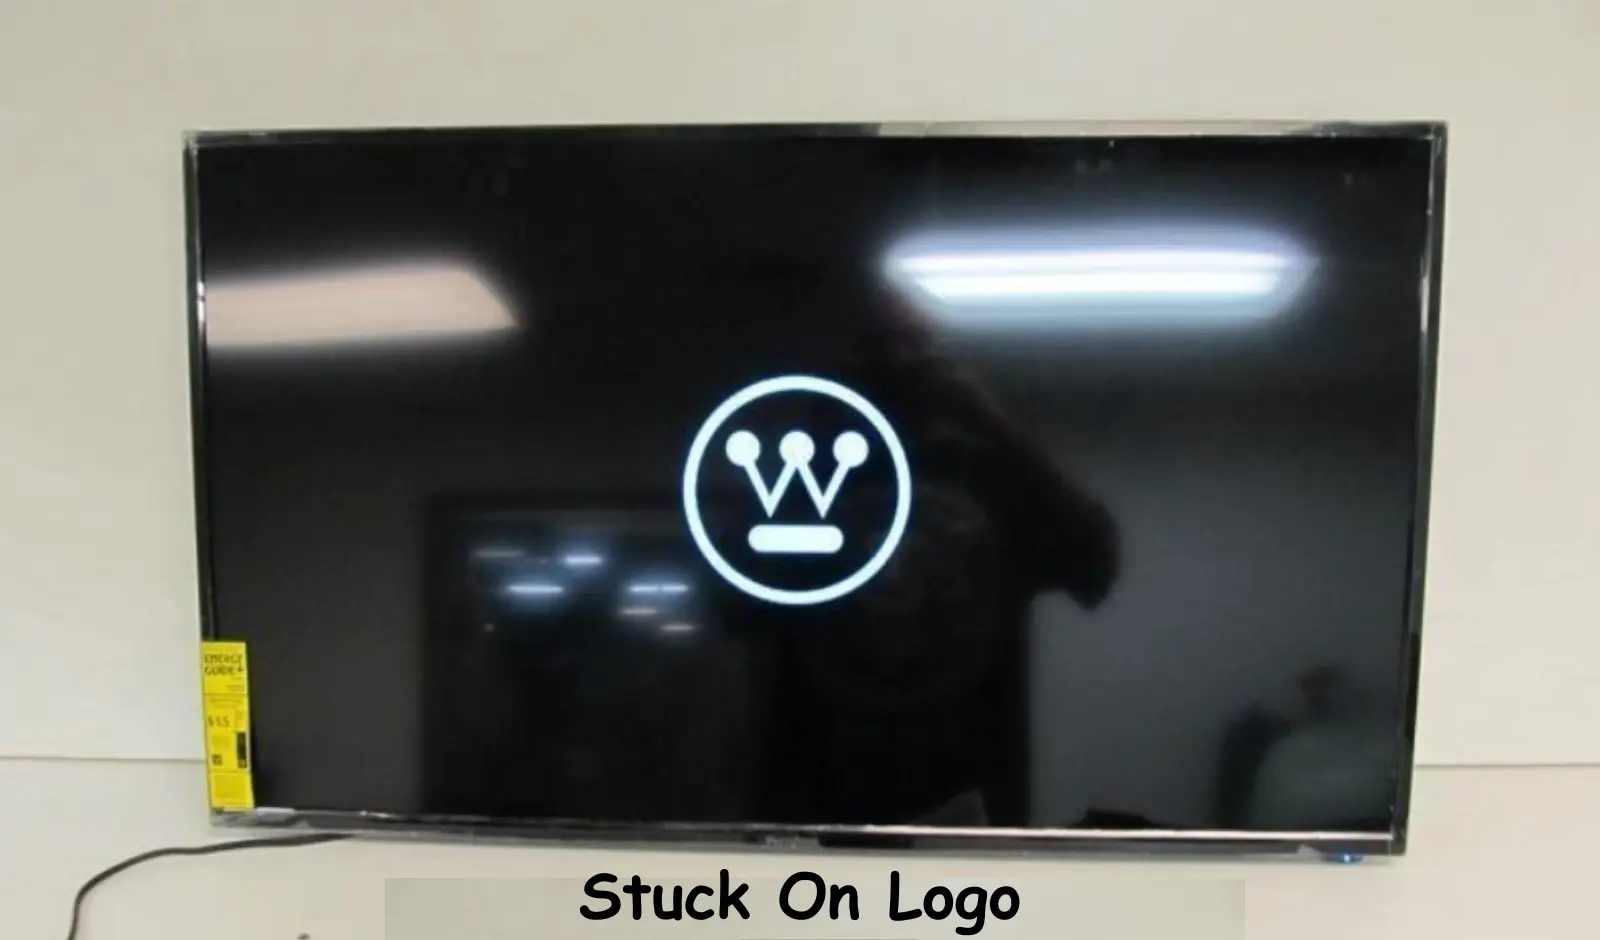 Westinghouse Roku TV Stuck on Logo screen